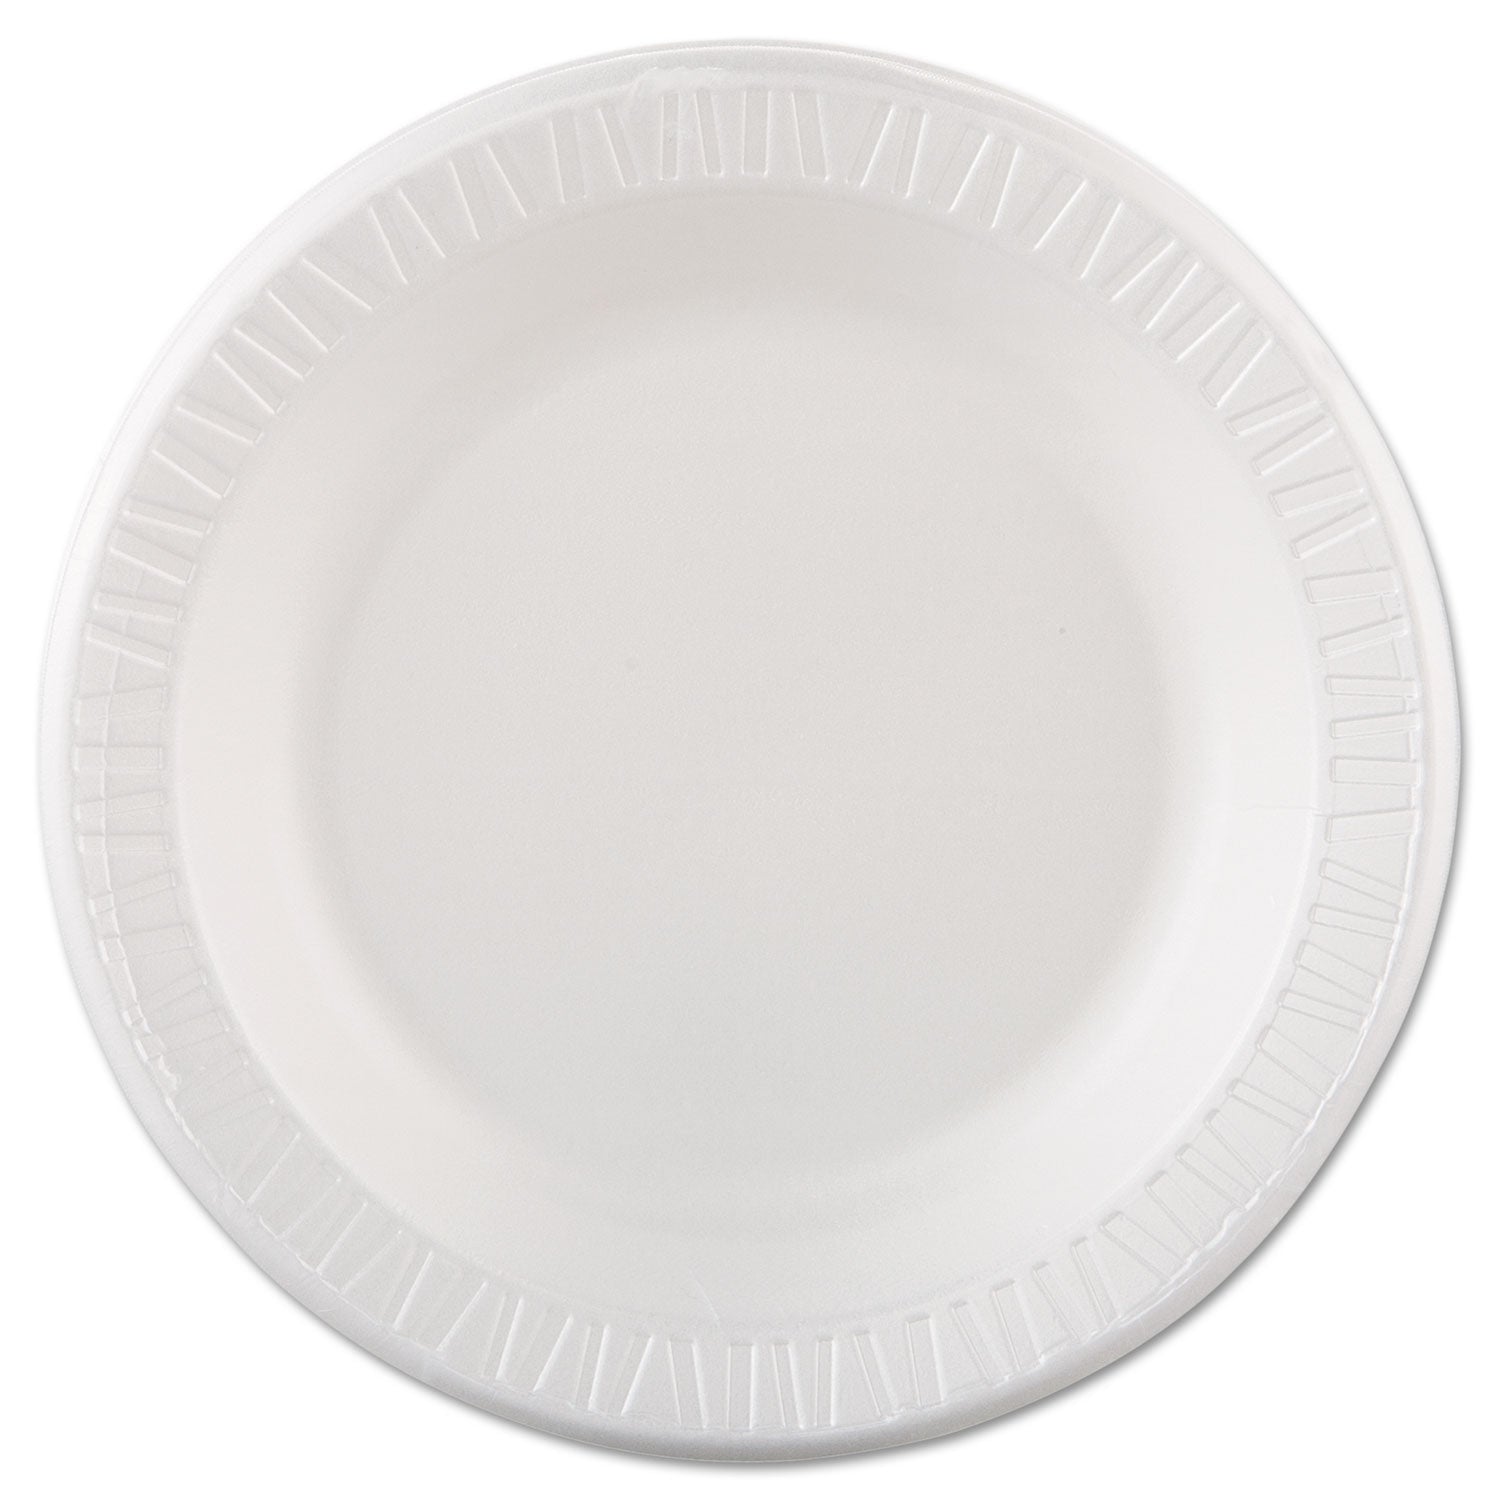 Quiet Classic Laminated Foam Dinnerware, Plate, 10.25" dia, White, 125/Pack, 4 Packs/Carton - 